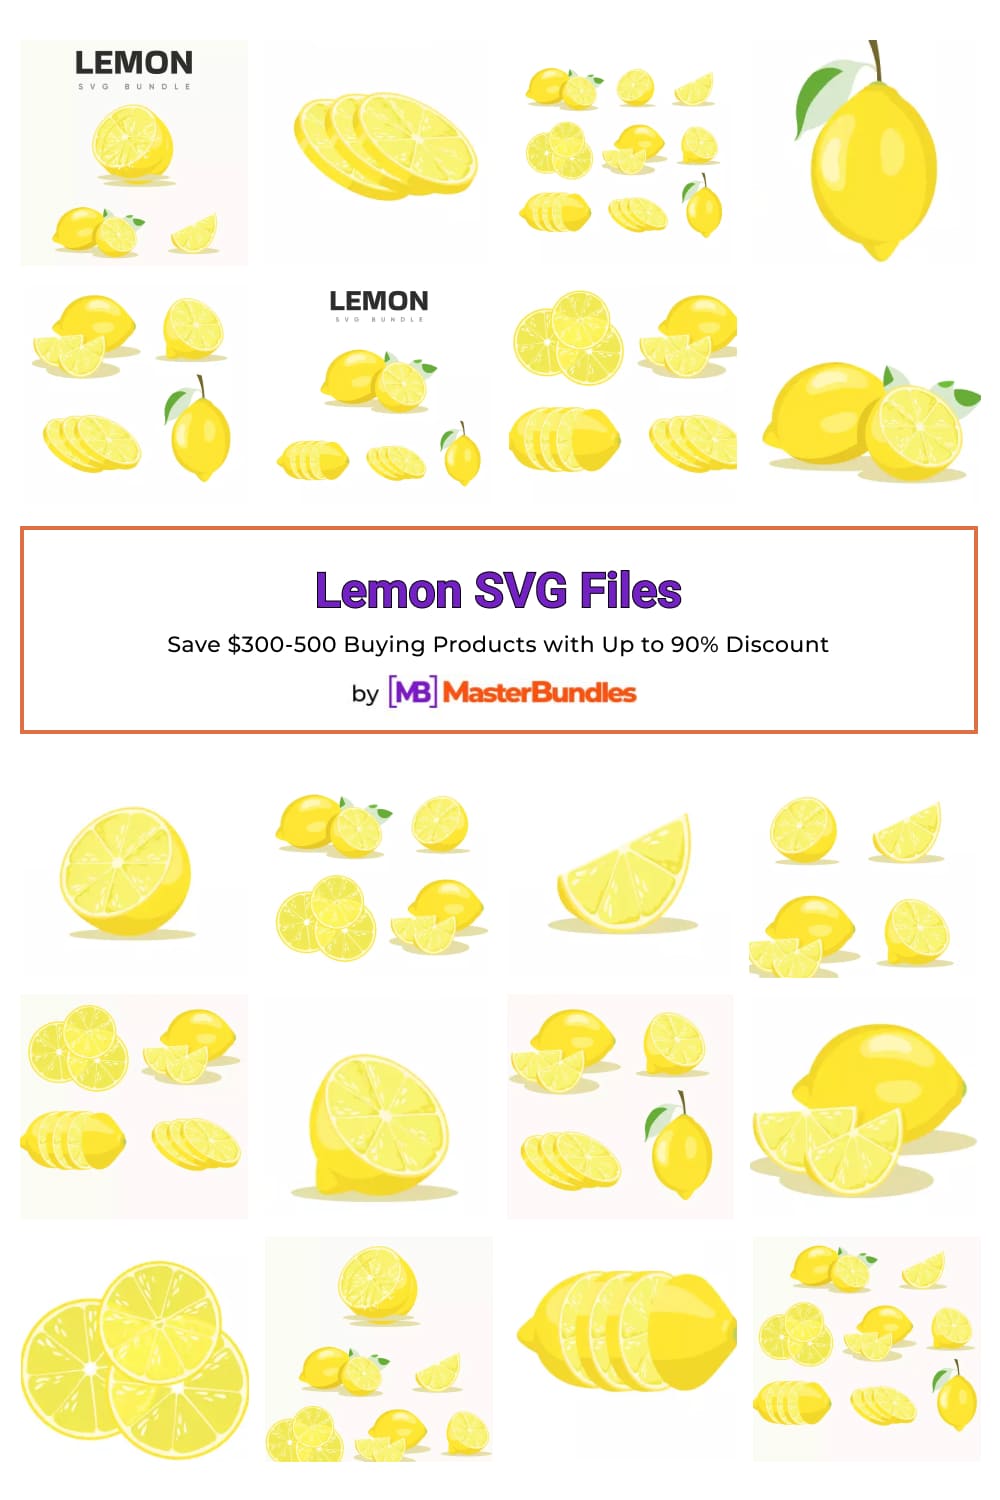 Lemon SVG Files Pinterest image.